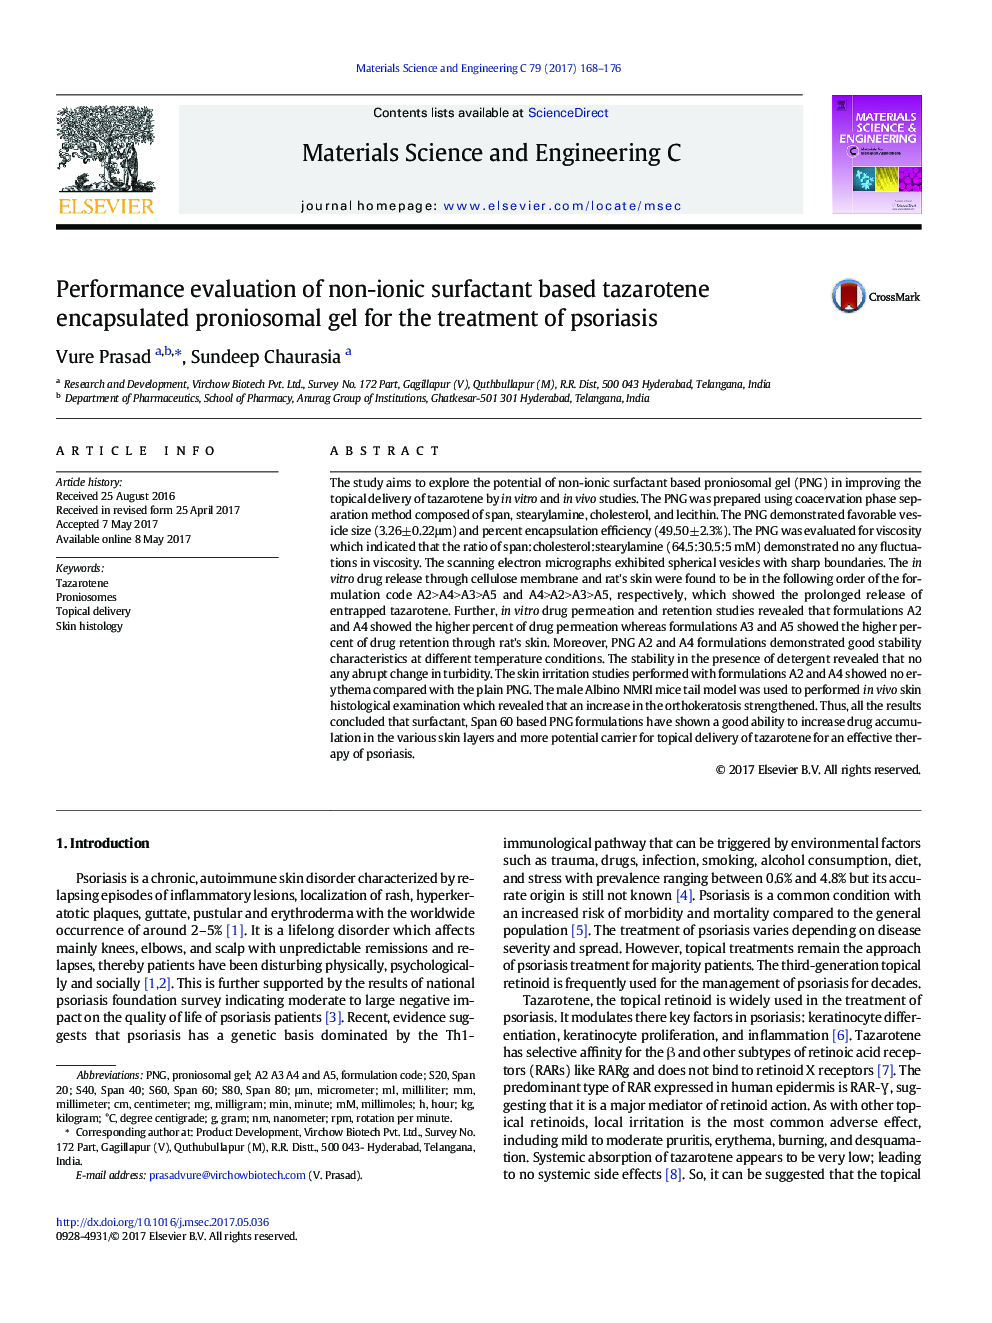 Performance evaluation of non-ionic surfactant based tazarotene encapsulated proniosomal gel for the treatment of psoriasis